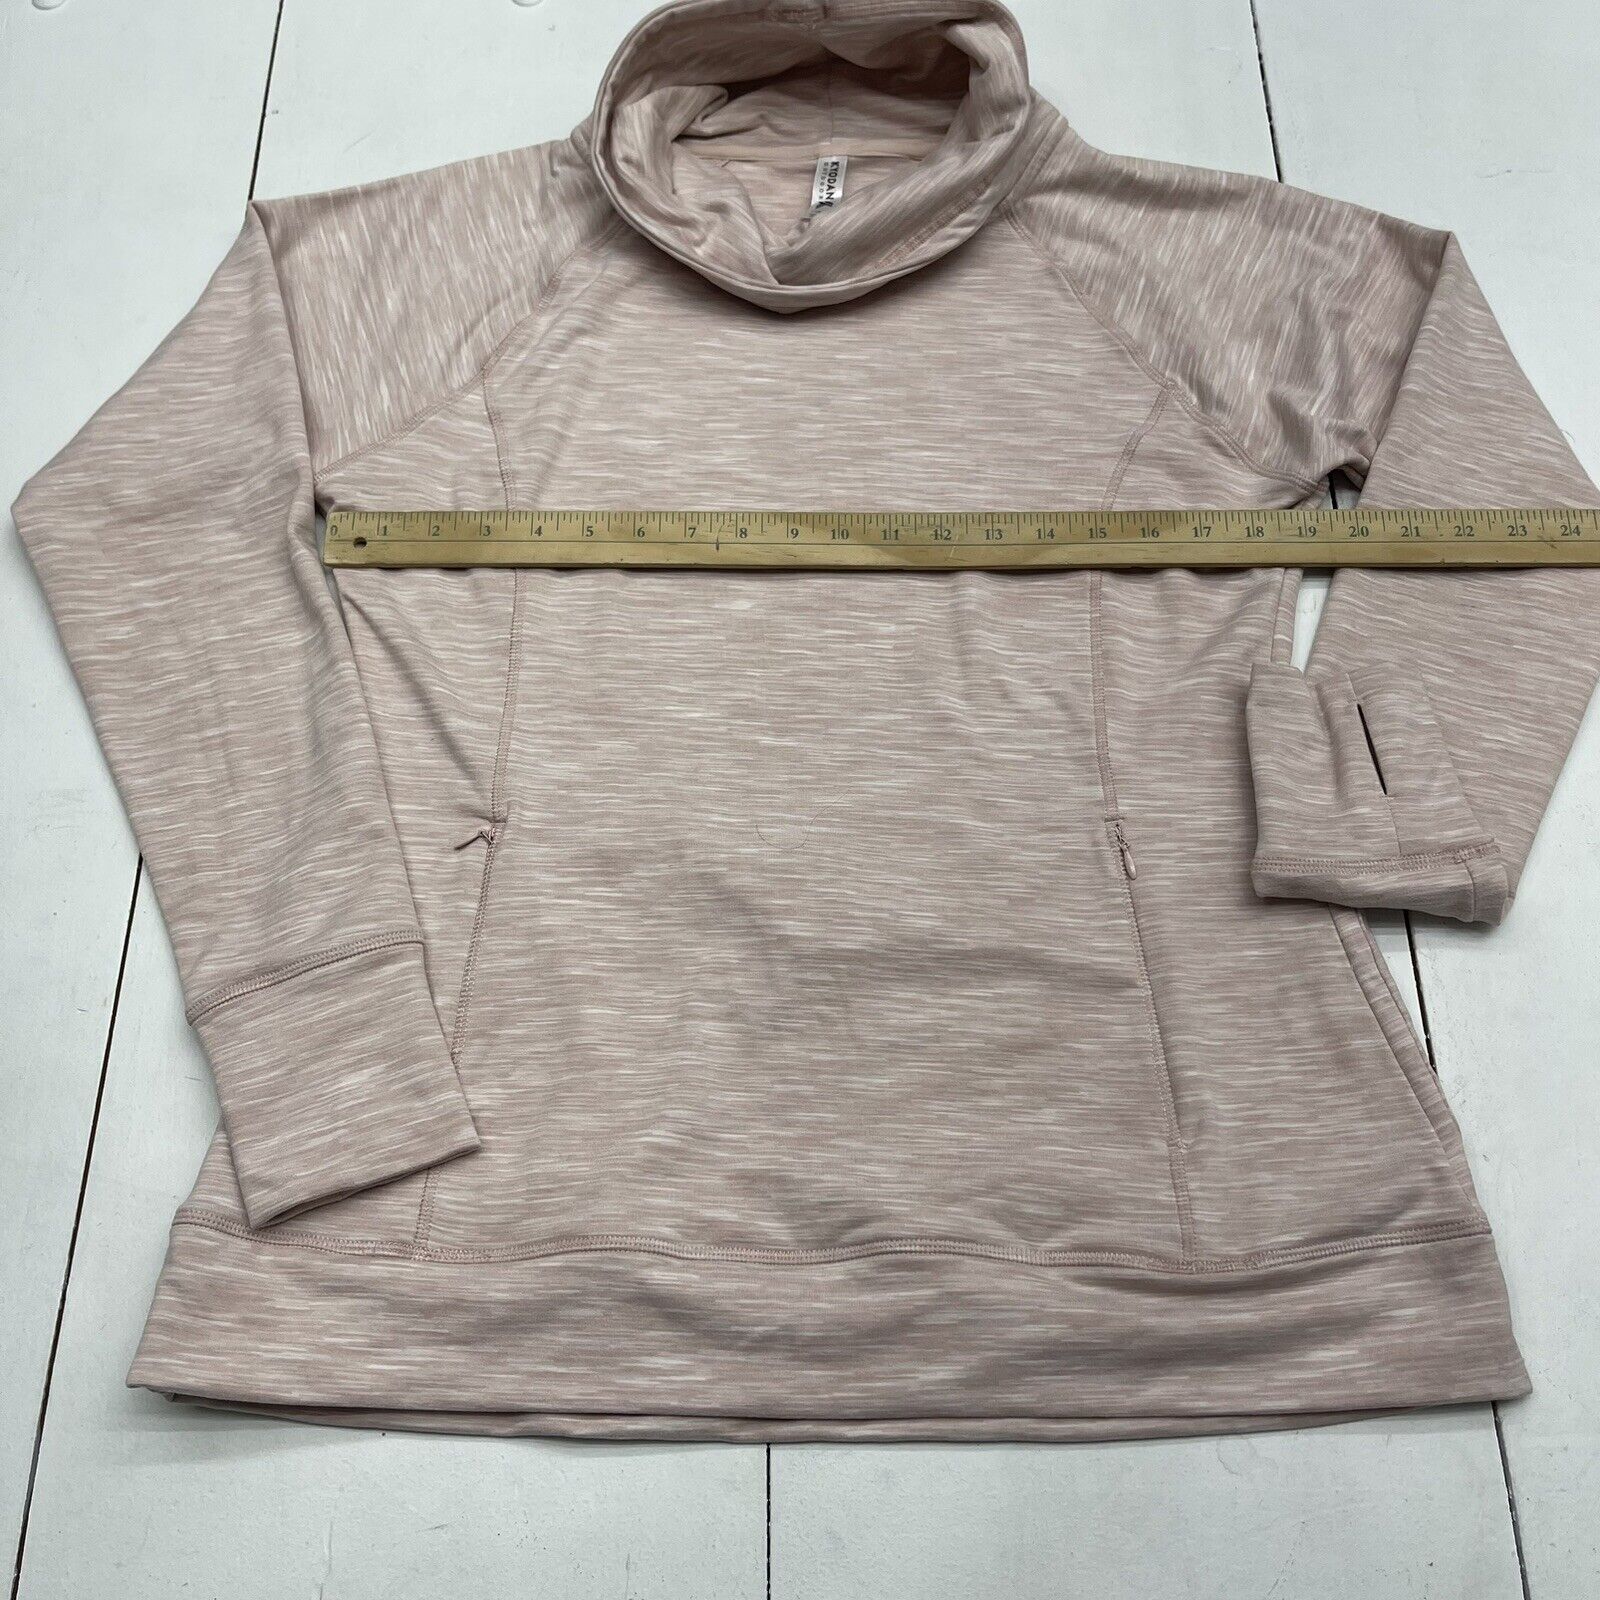 Kyodan Outdoor Pink Cowl Neck Sweater Women's Size XL - beyond exchange